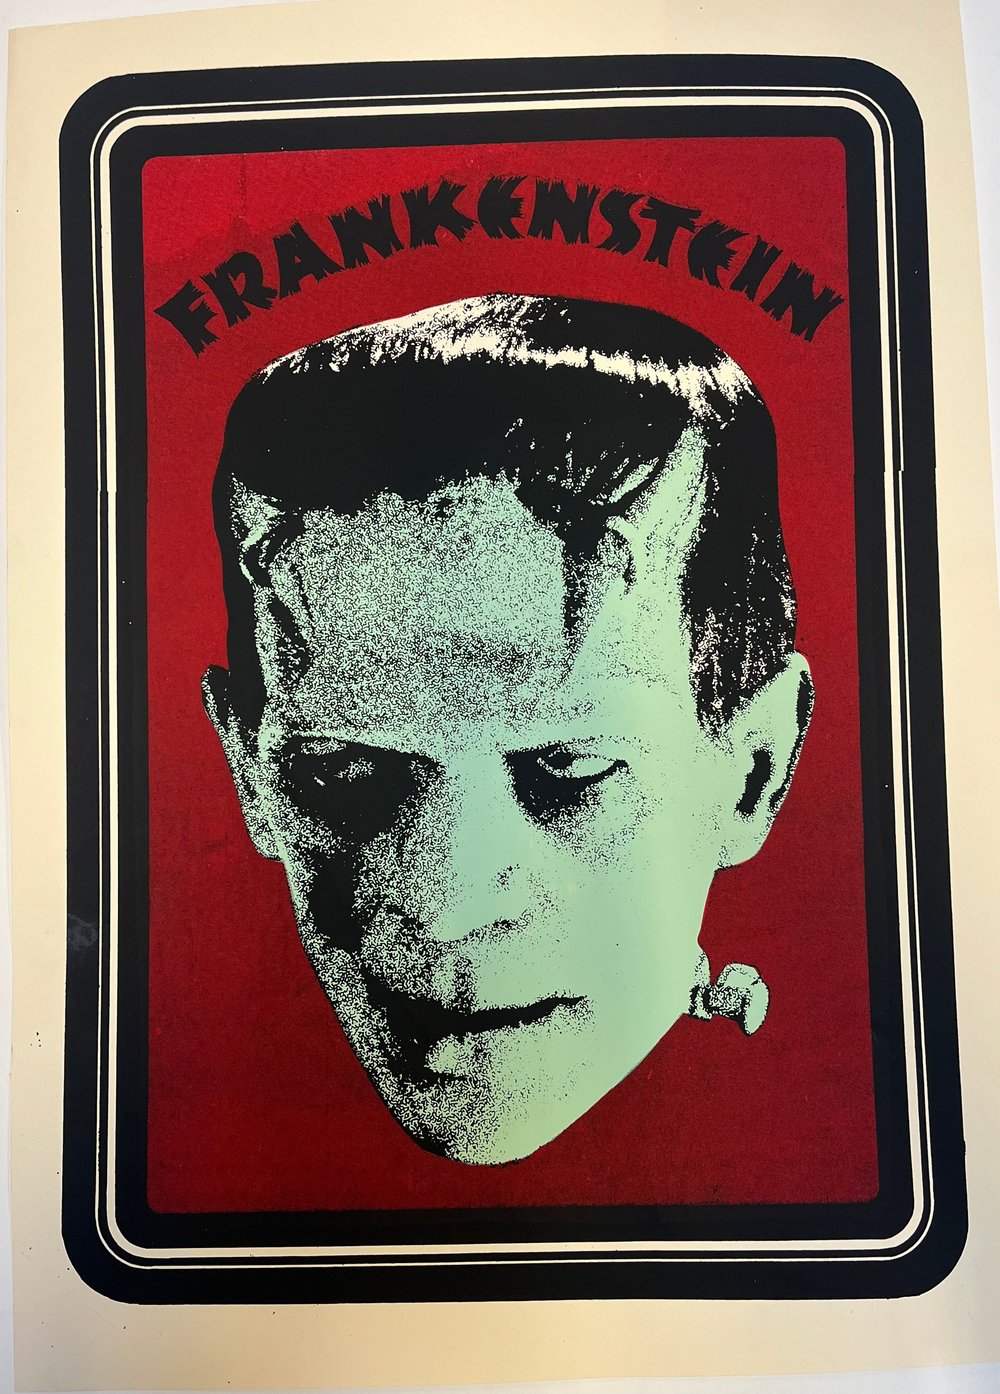 Image of Frankenstein